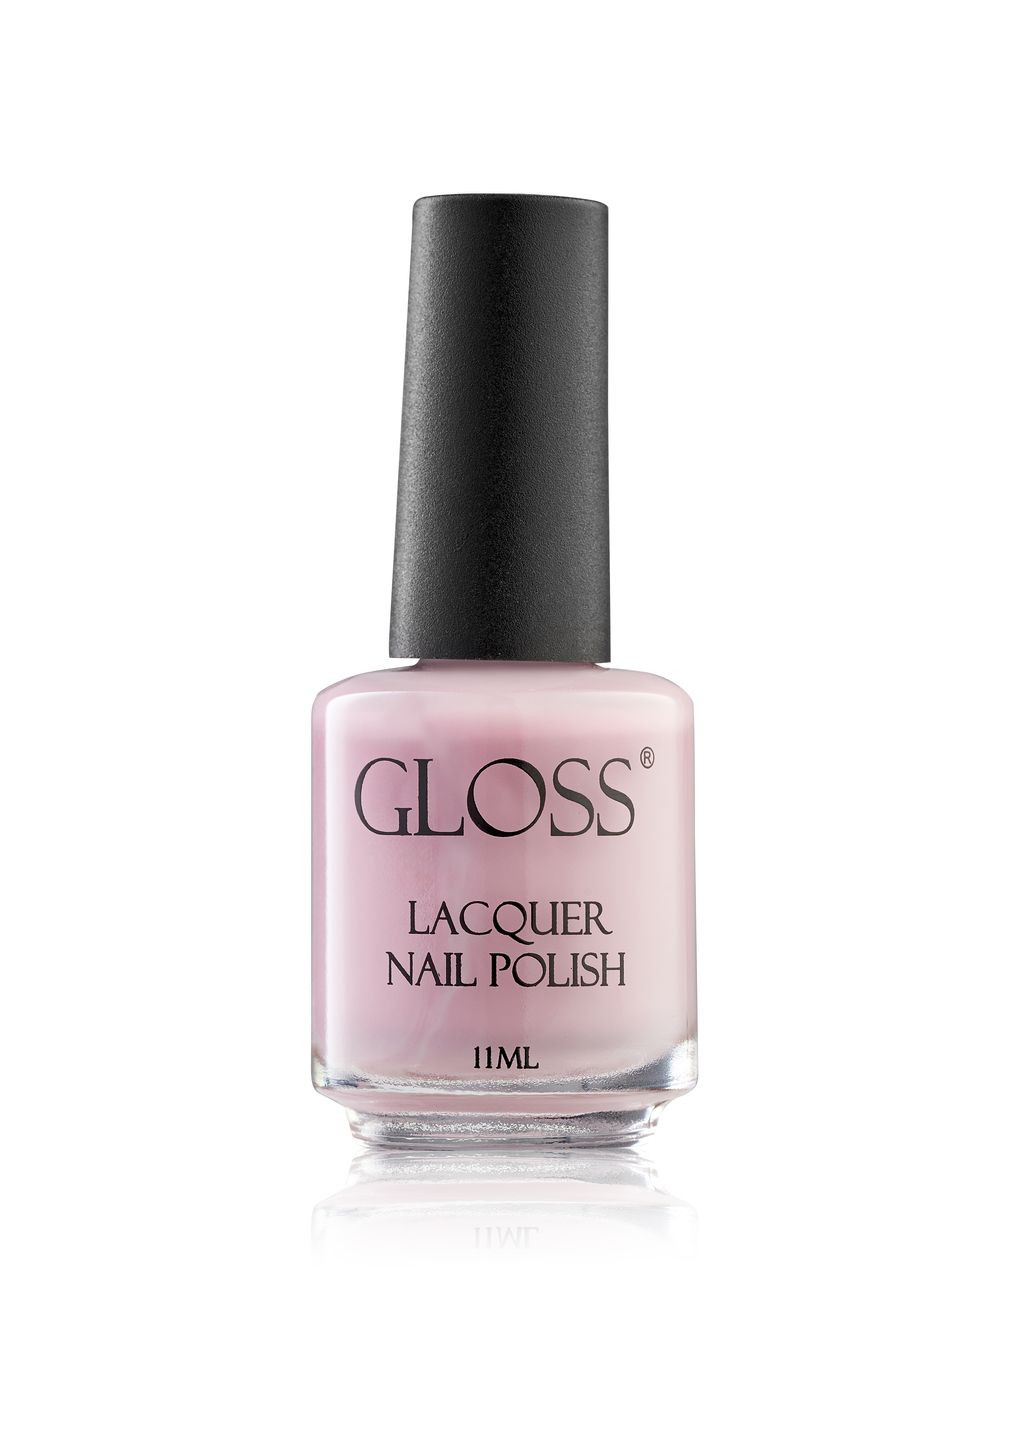 Лак для ногтей GLOSS 020, 11 мл Gloss Company lacquer nail polish (276255614)